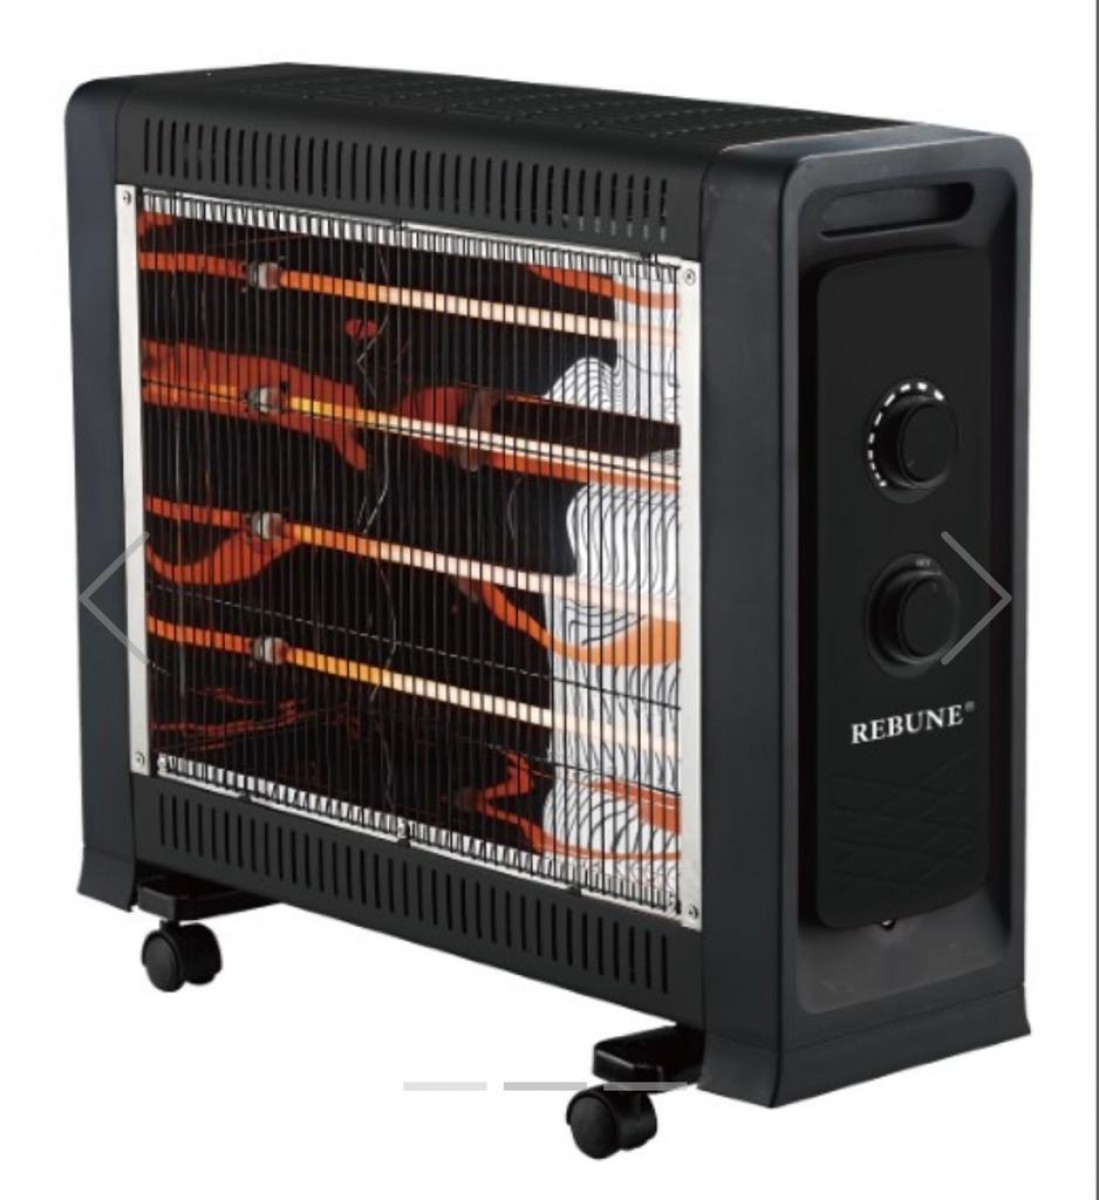 Rebune electric heater 1 face black color 24200 watts